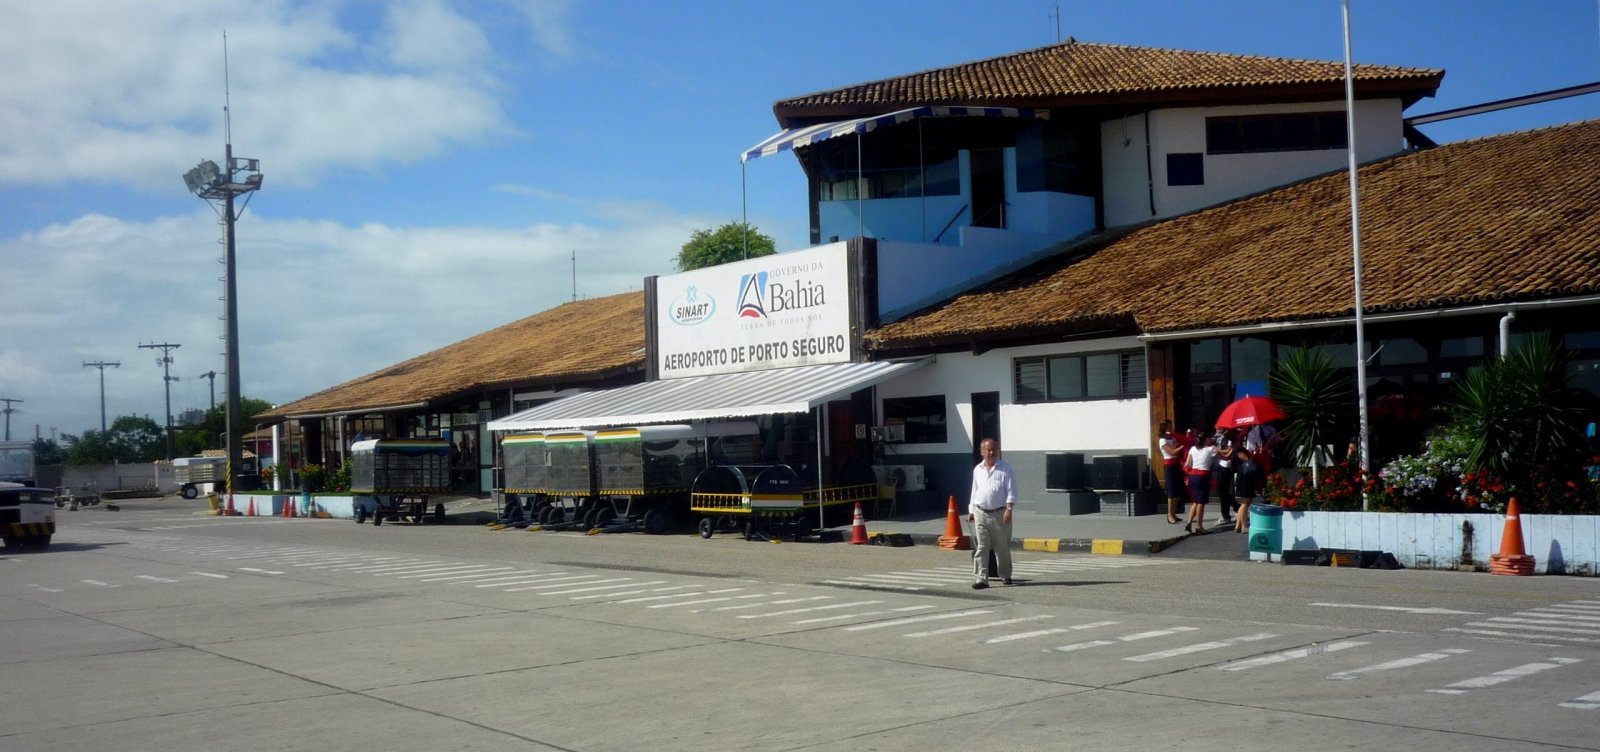 Aeroporto de Porto Seguro volta a receber voos comerciais após quase 80 dias